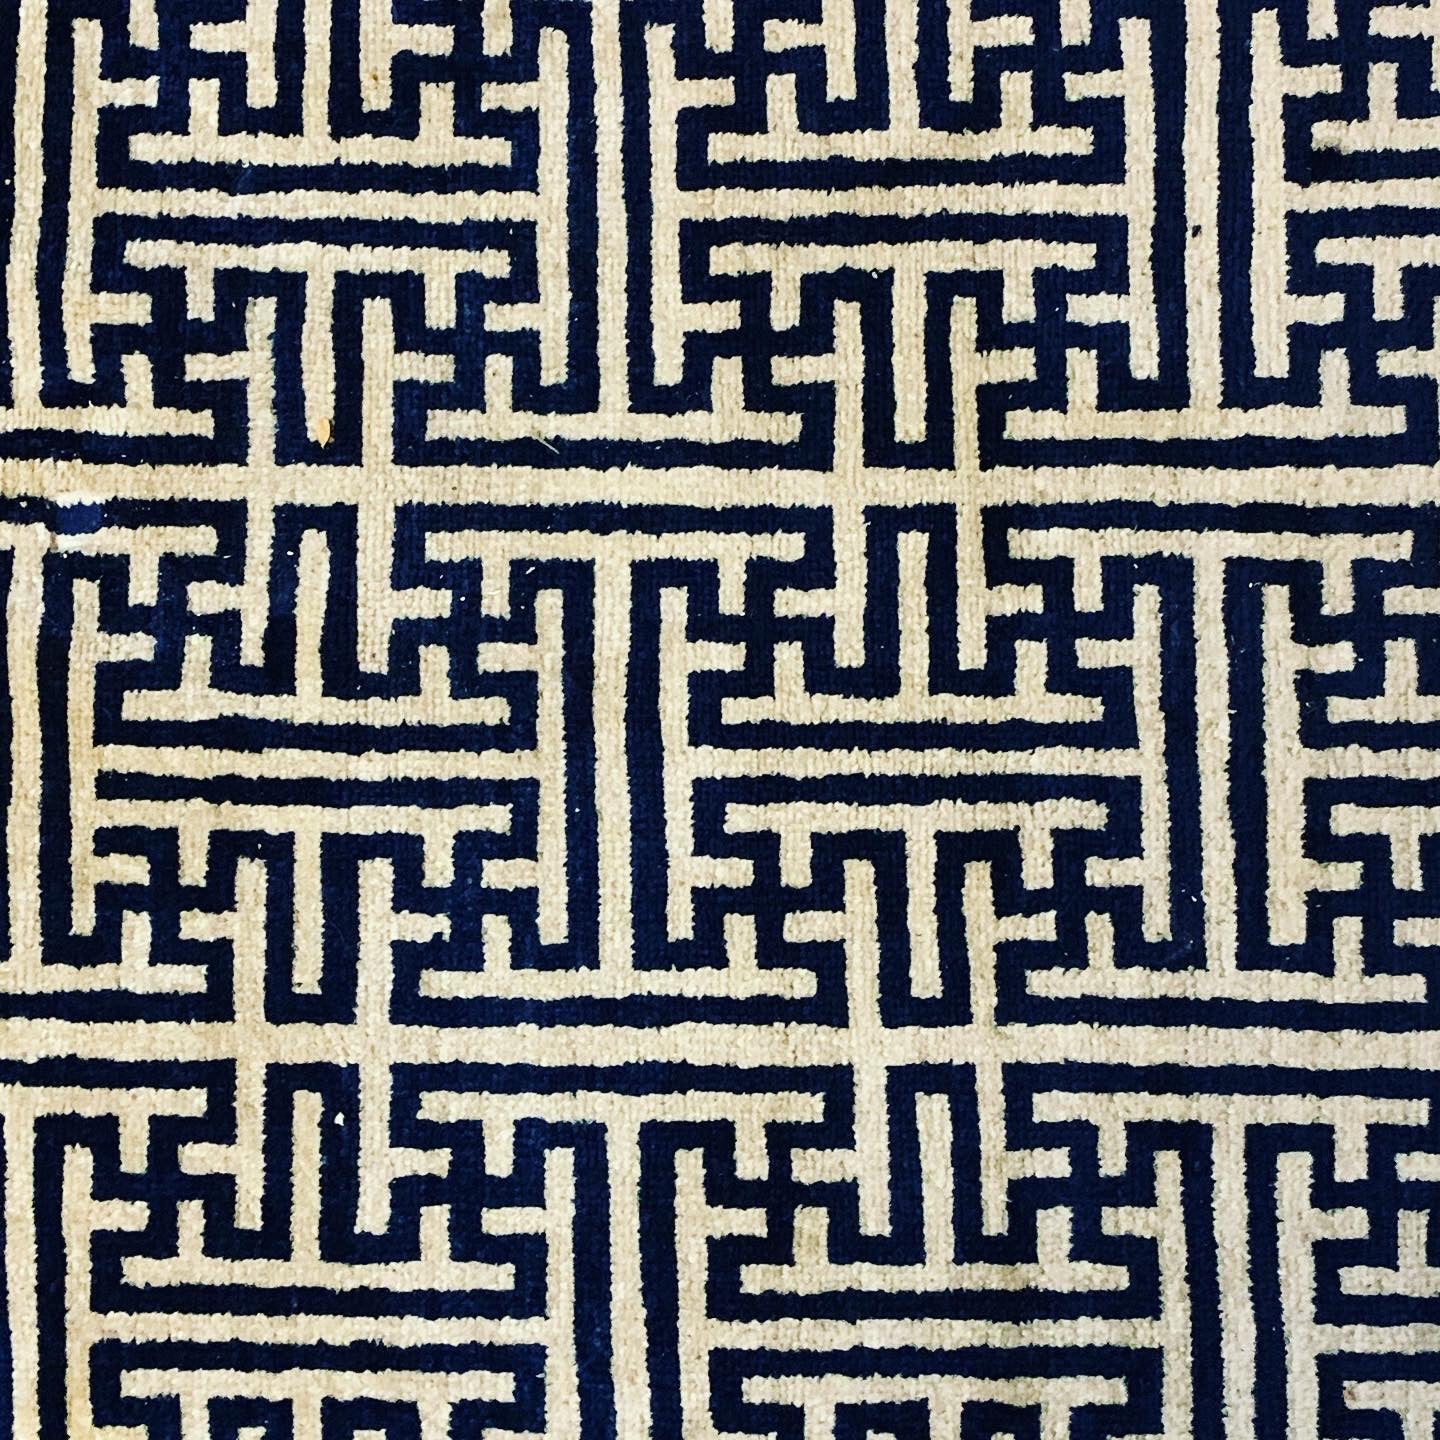 Antique Peking / Ningxia swastika rug